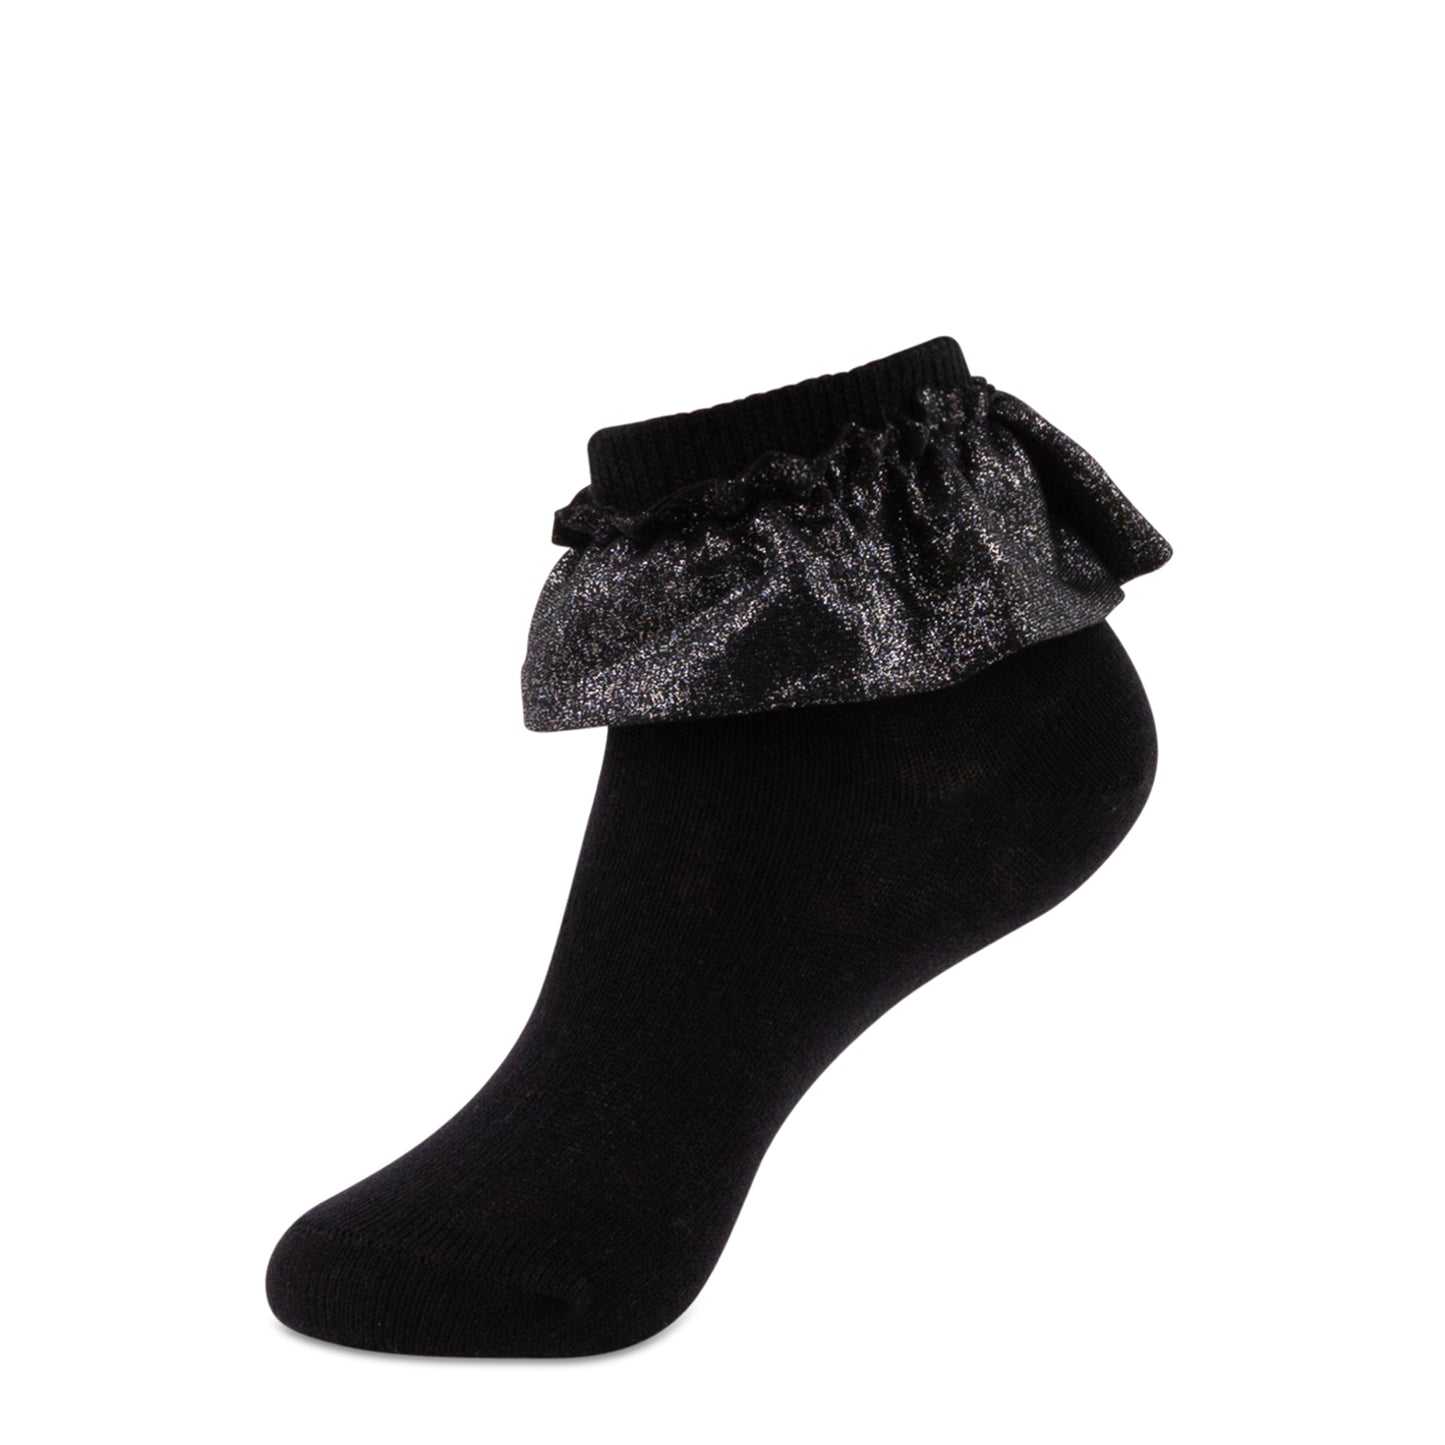 jrp socks black metallic lace anklet ruffle sock